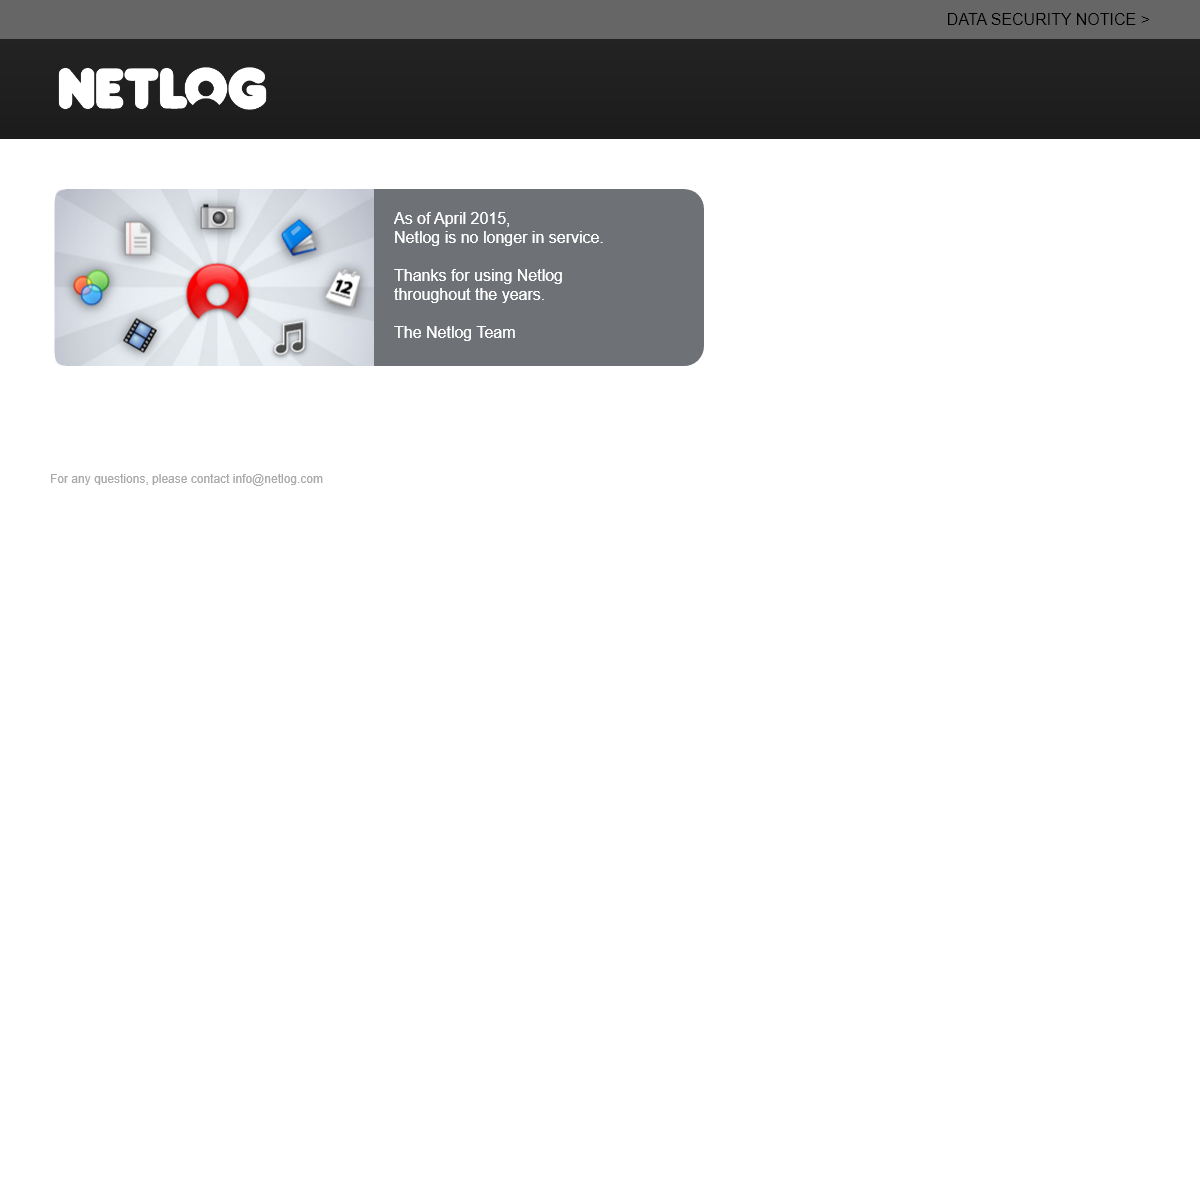 A complete backup of netlog.com